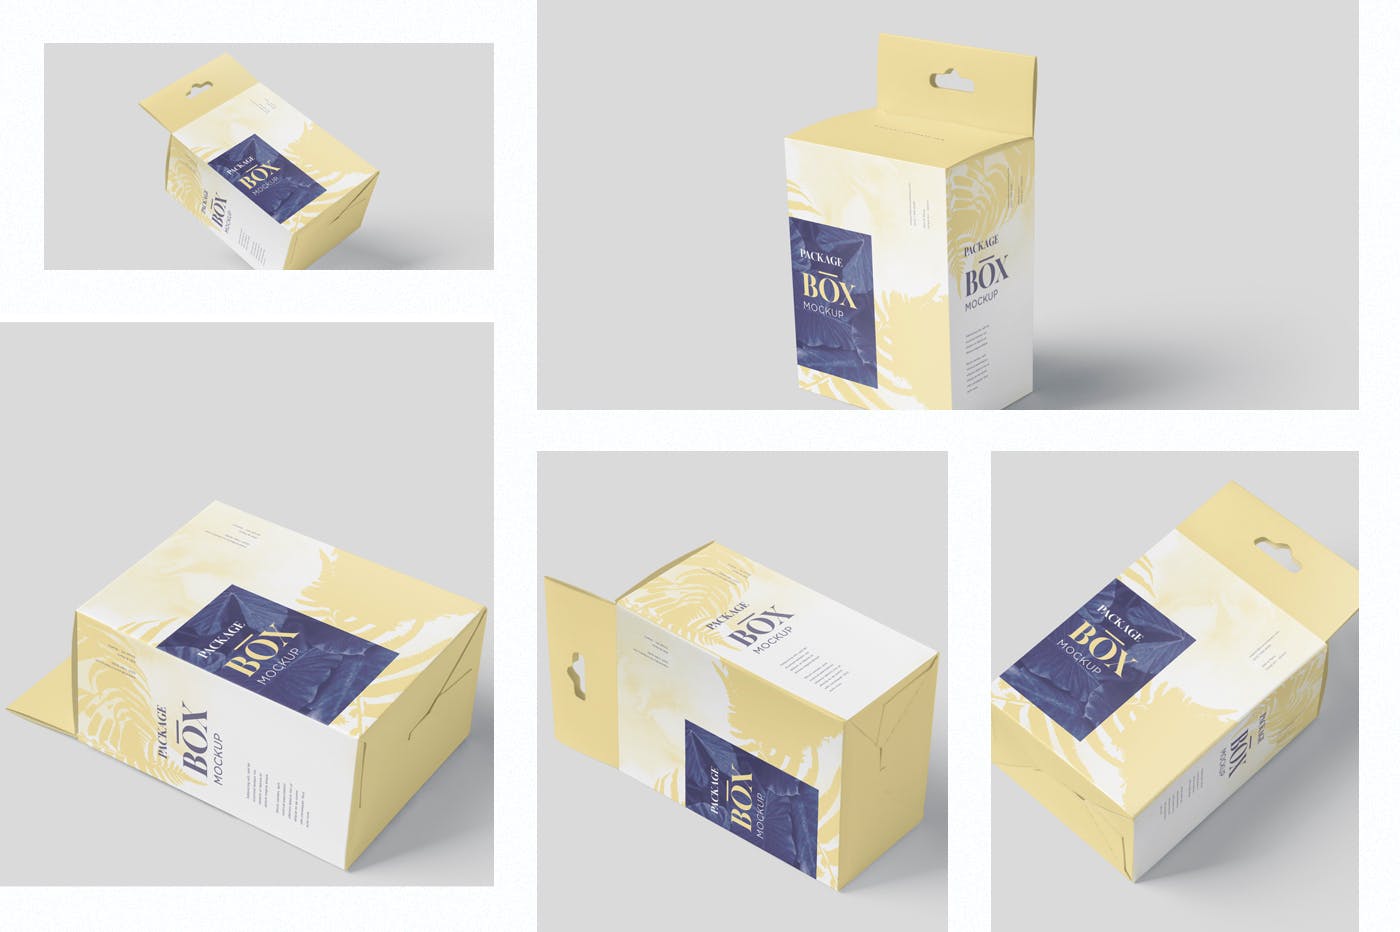 挂耳式扁平矩形包装盒蚂蚁素材精选模板 Package Box Mockup Set – Slim Square with Hanger插图(1)